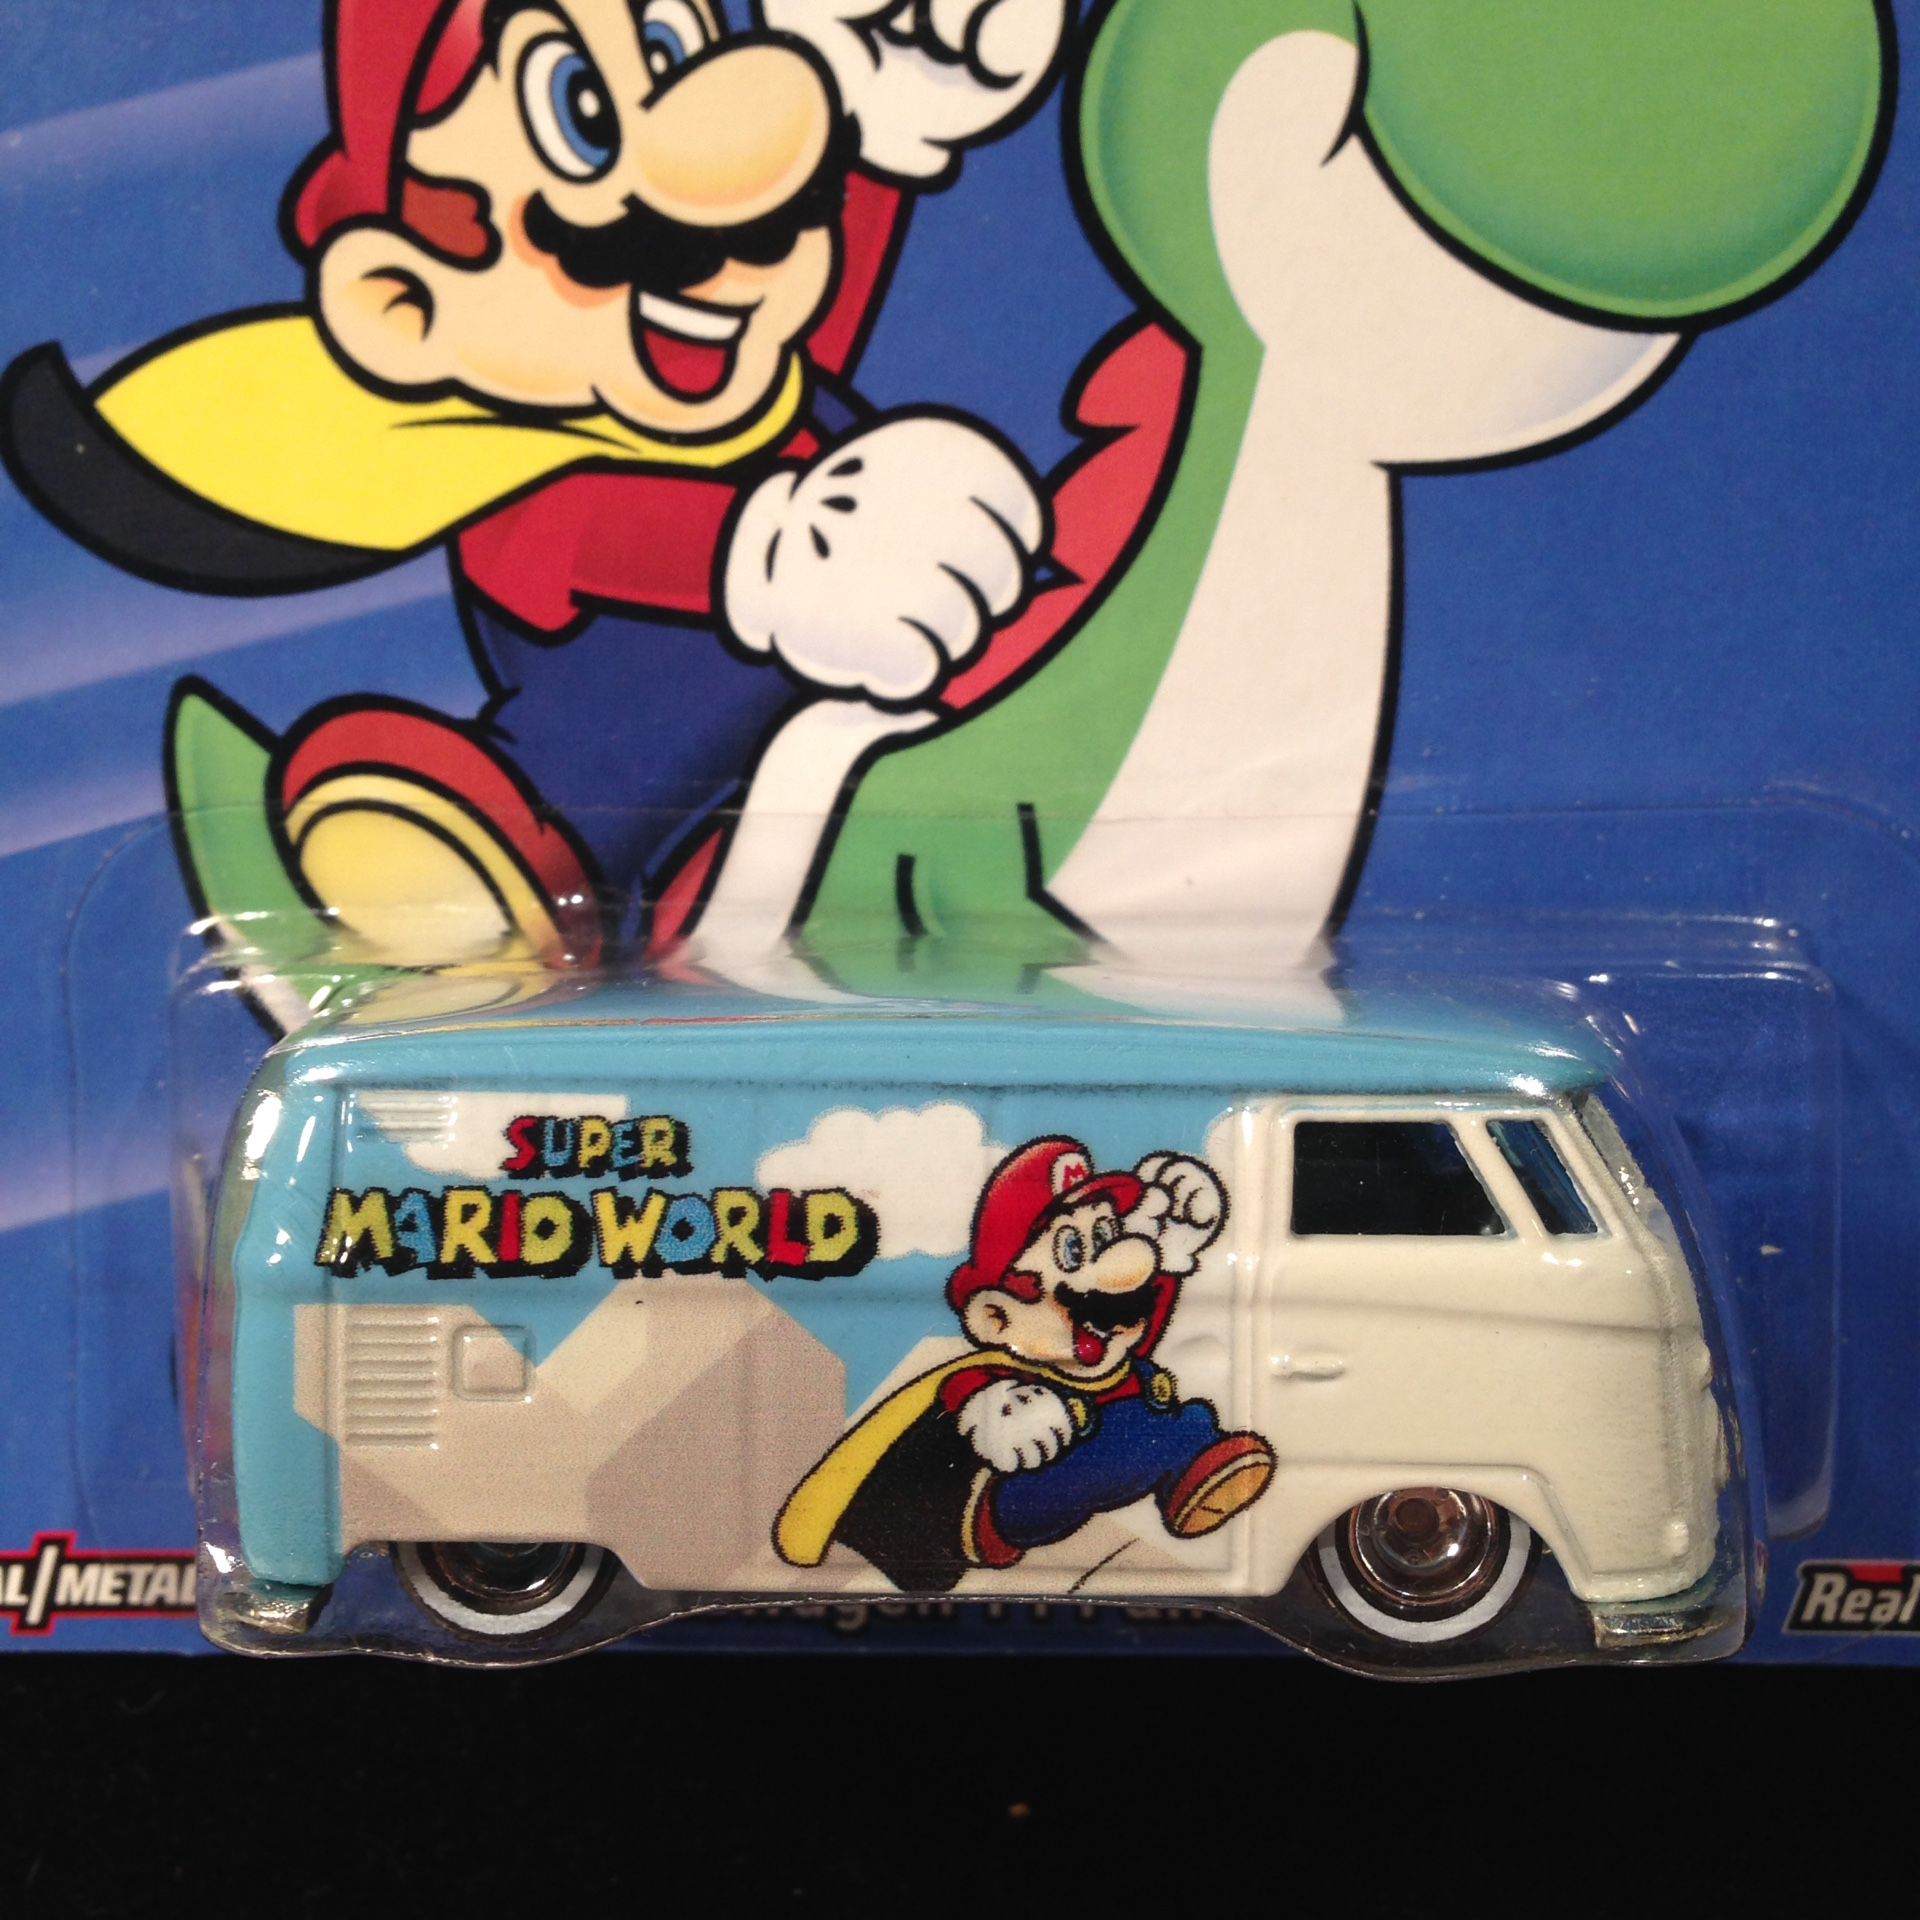 Hot Wheels Pop Culture Super Mario World Volkswagen T1 Panel Bus • Metal/Metal • Real Riders • WILL SHIP NATIONWIDE •